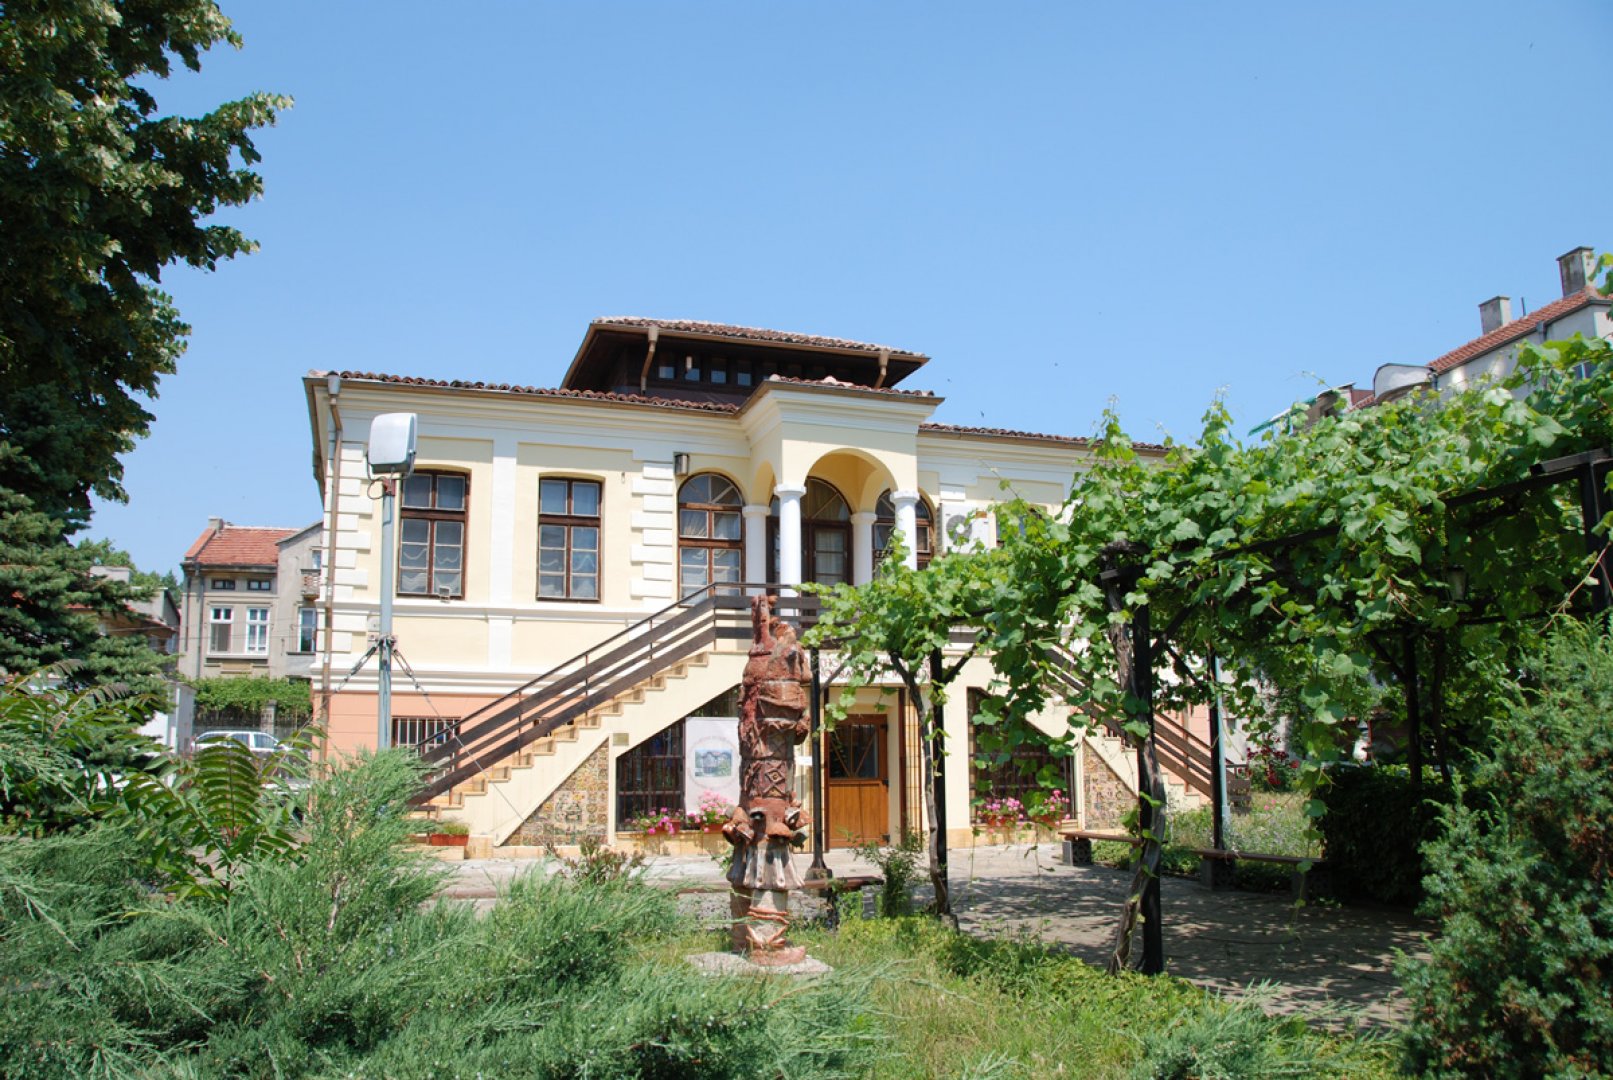 Етнографският музей затваря врати заради ремонт - E-Burgas.com